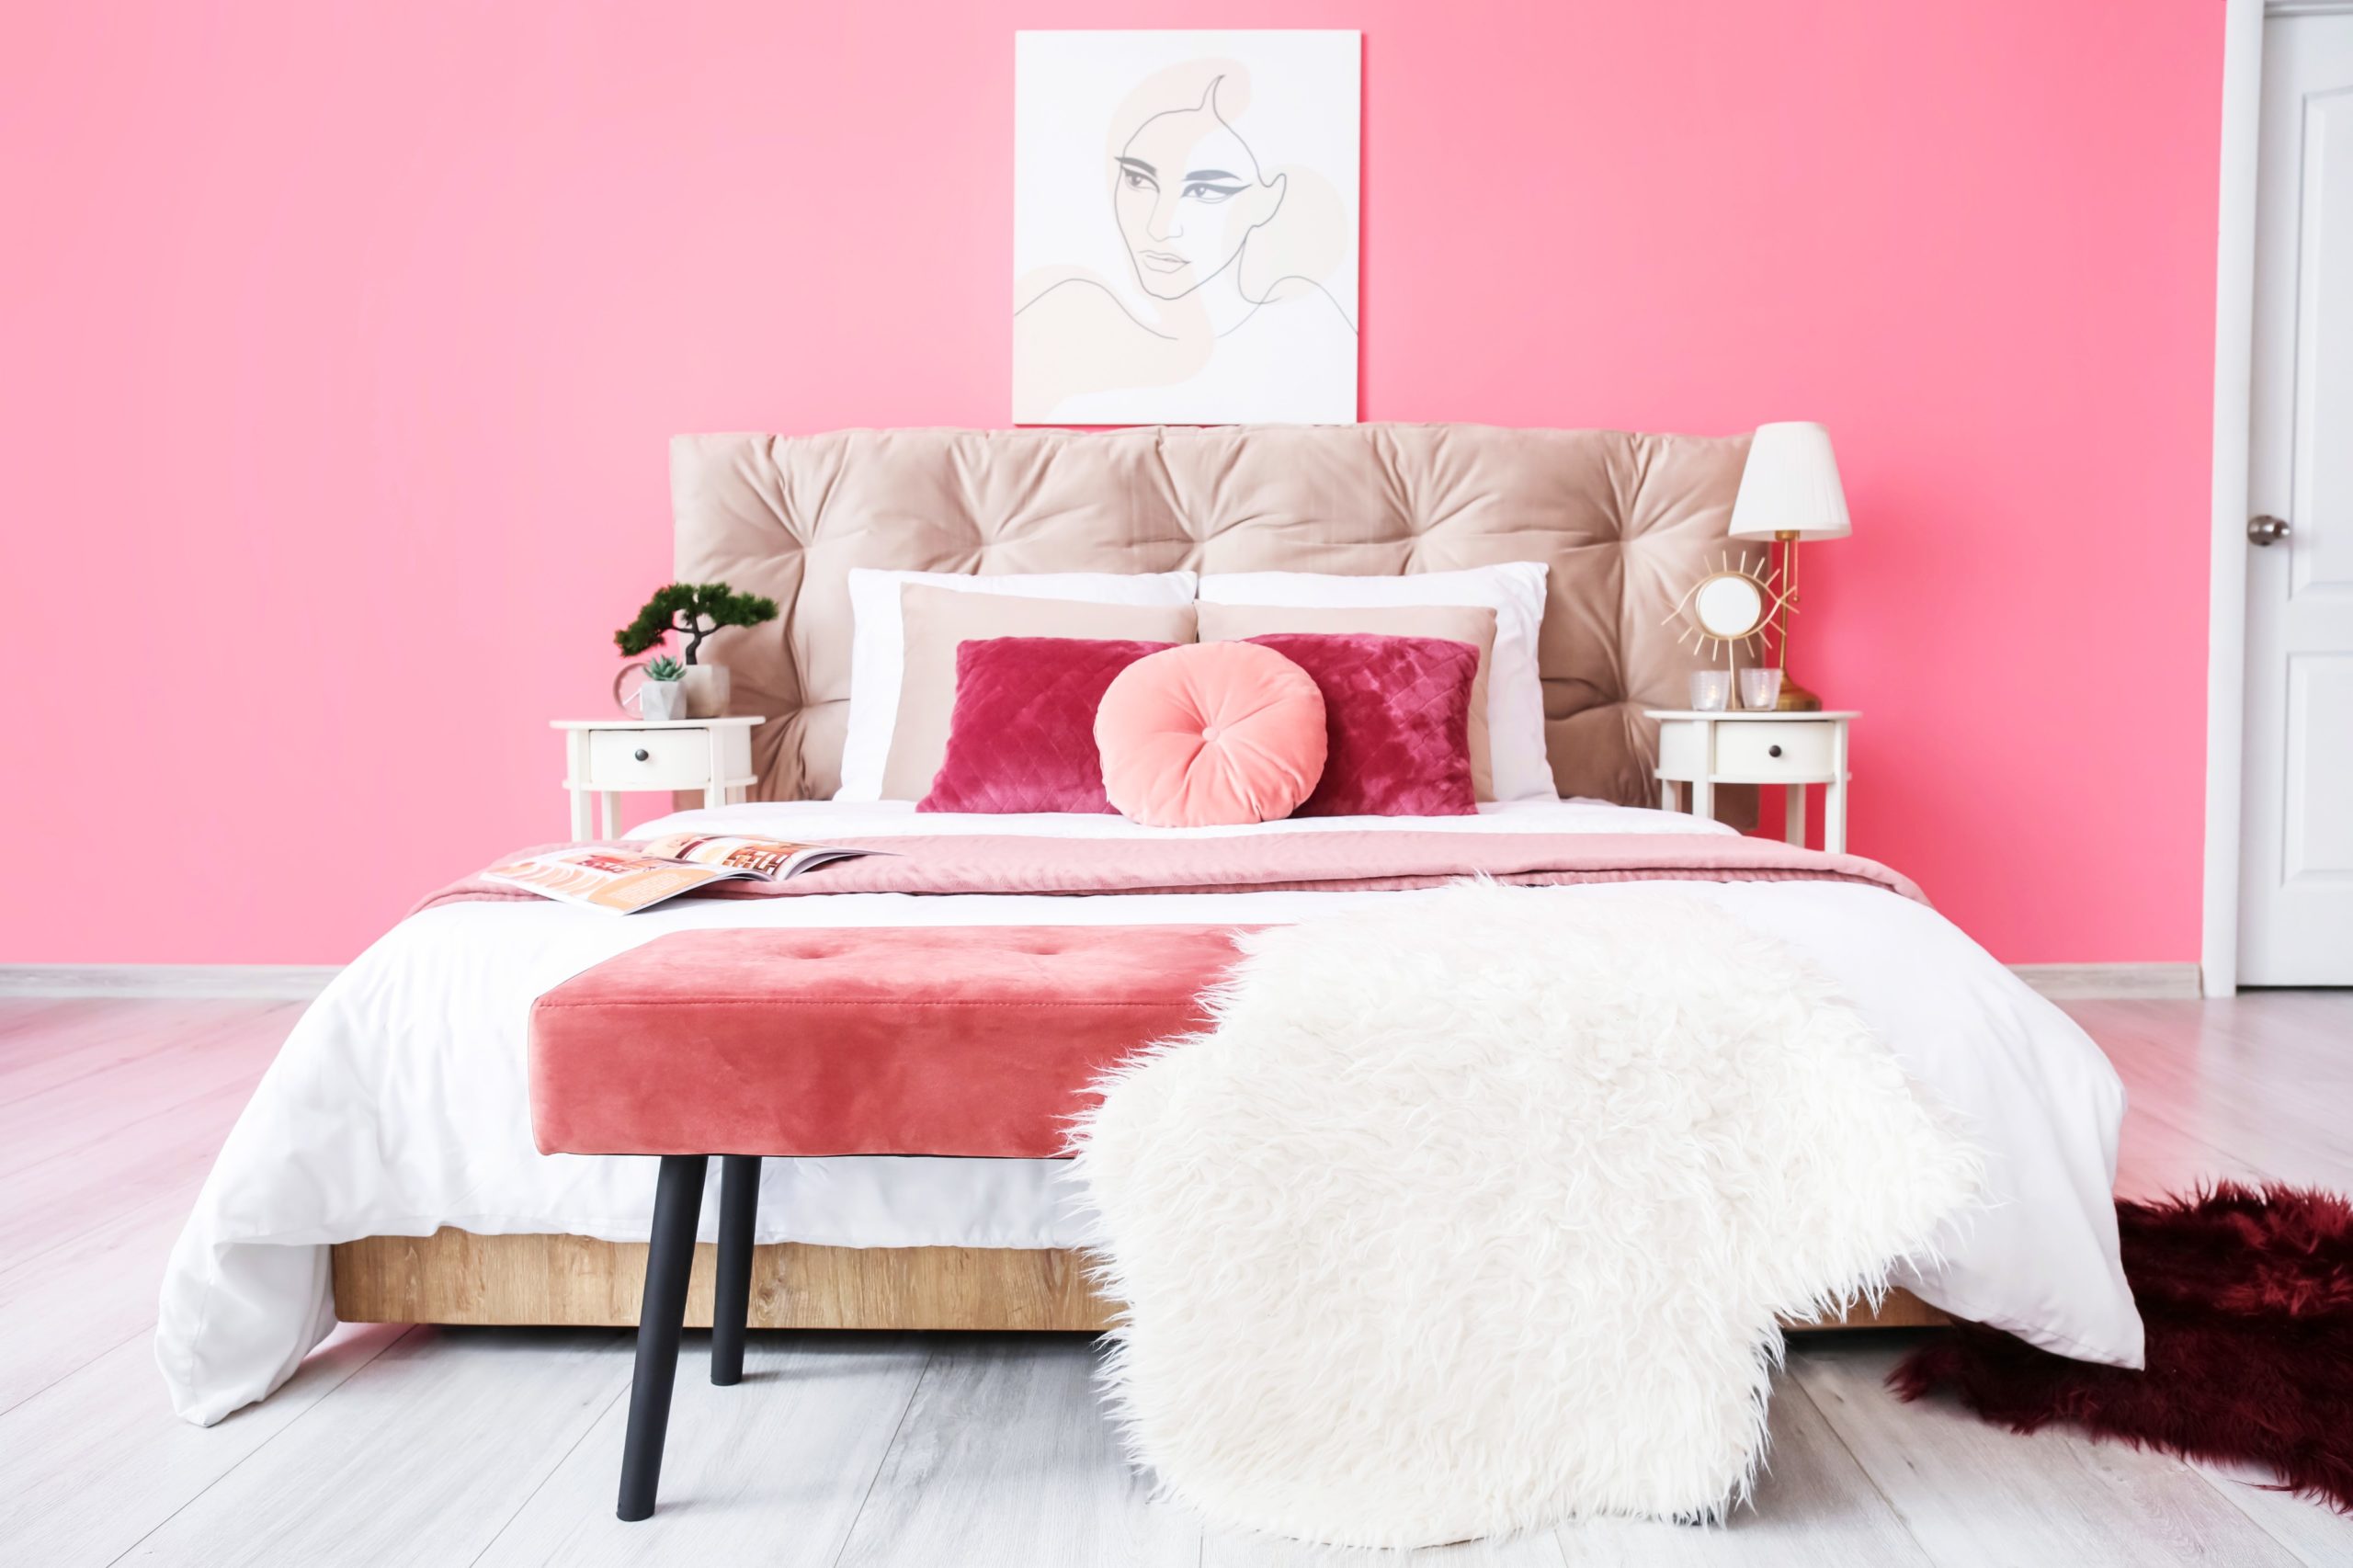 <img src="barbie.jpg" alt="barbie pink bedroom with art"/> 